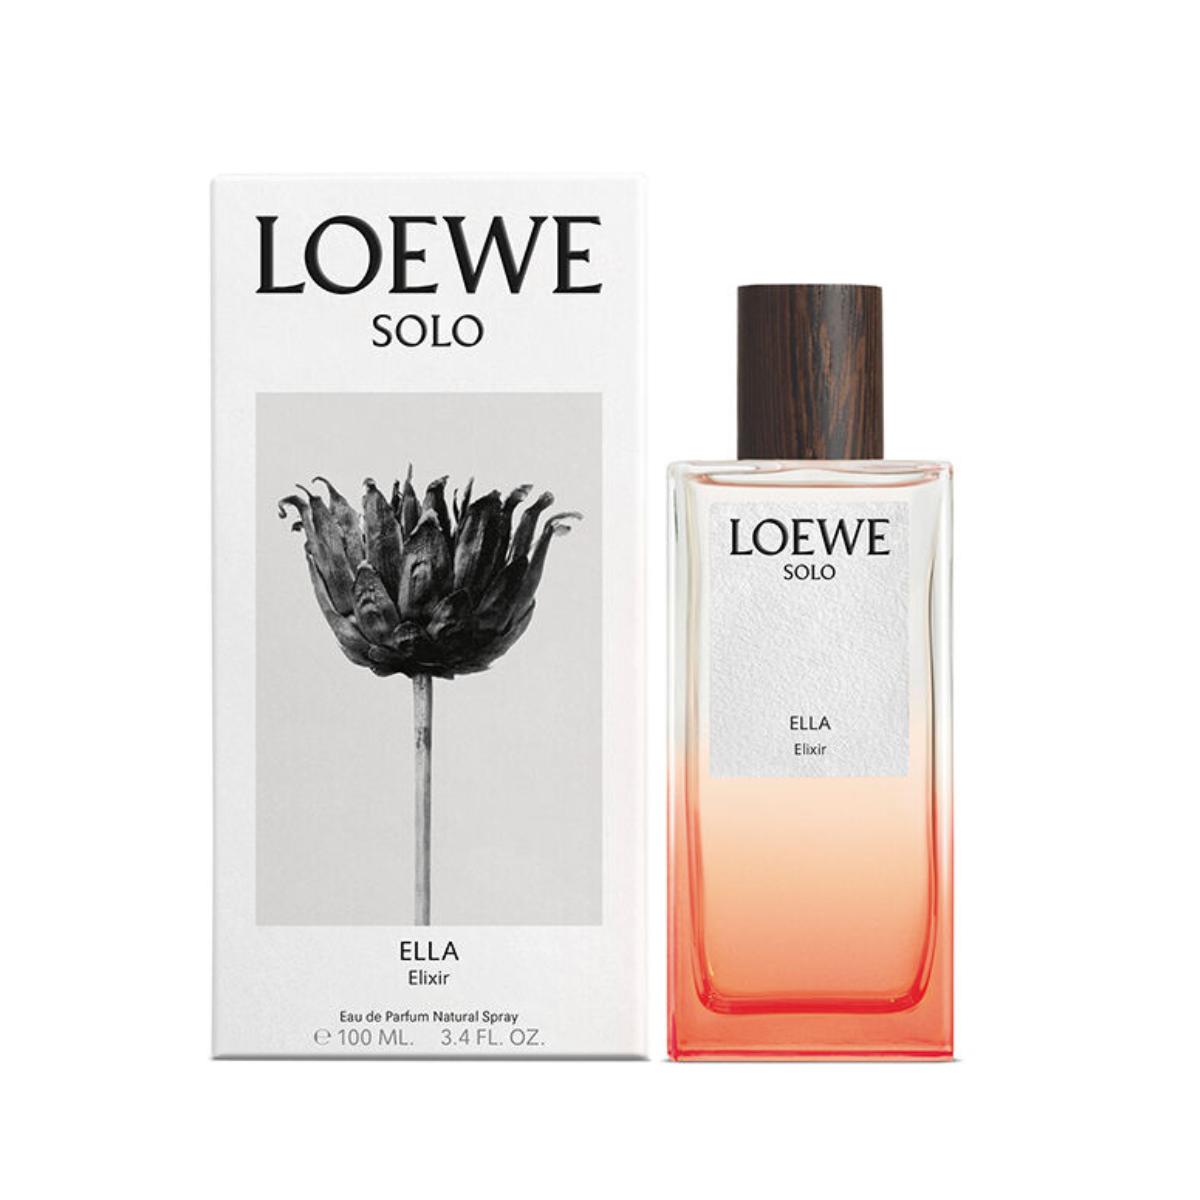 Loewe Solo Ella Elixir Eau de Parfum